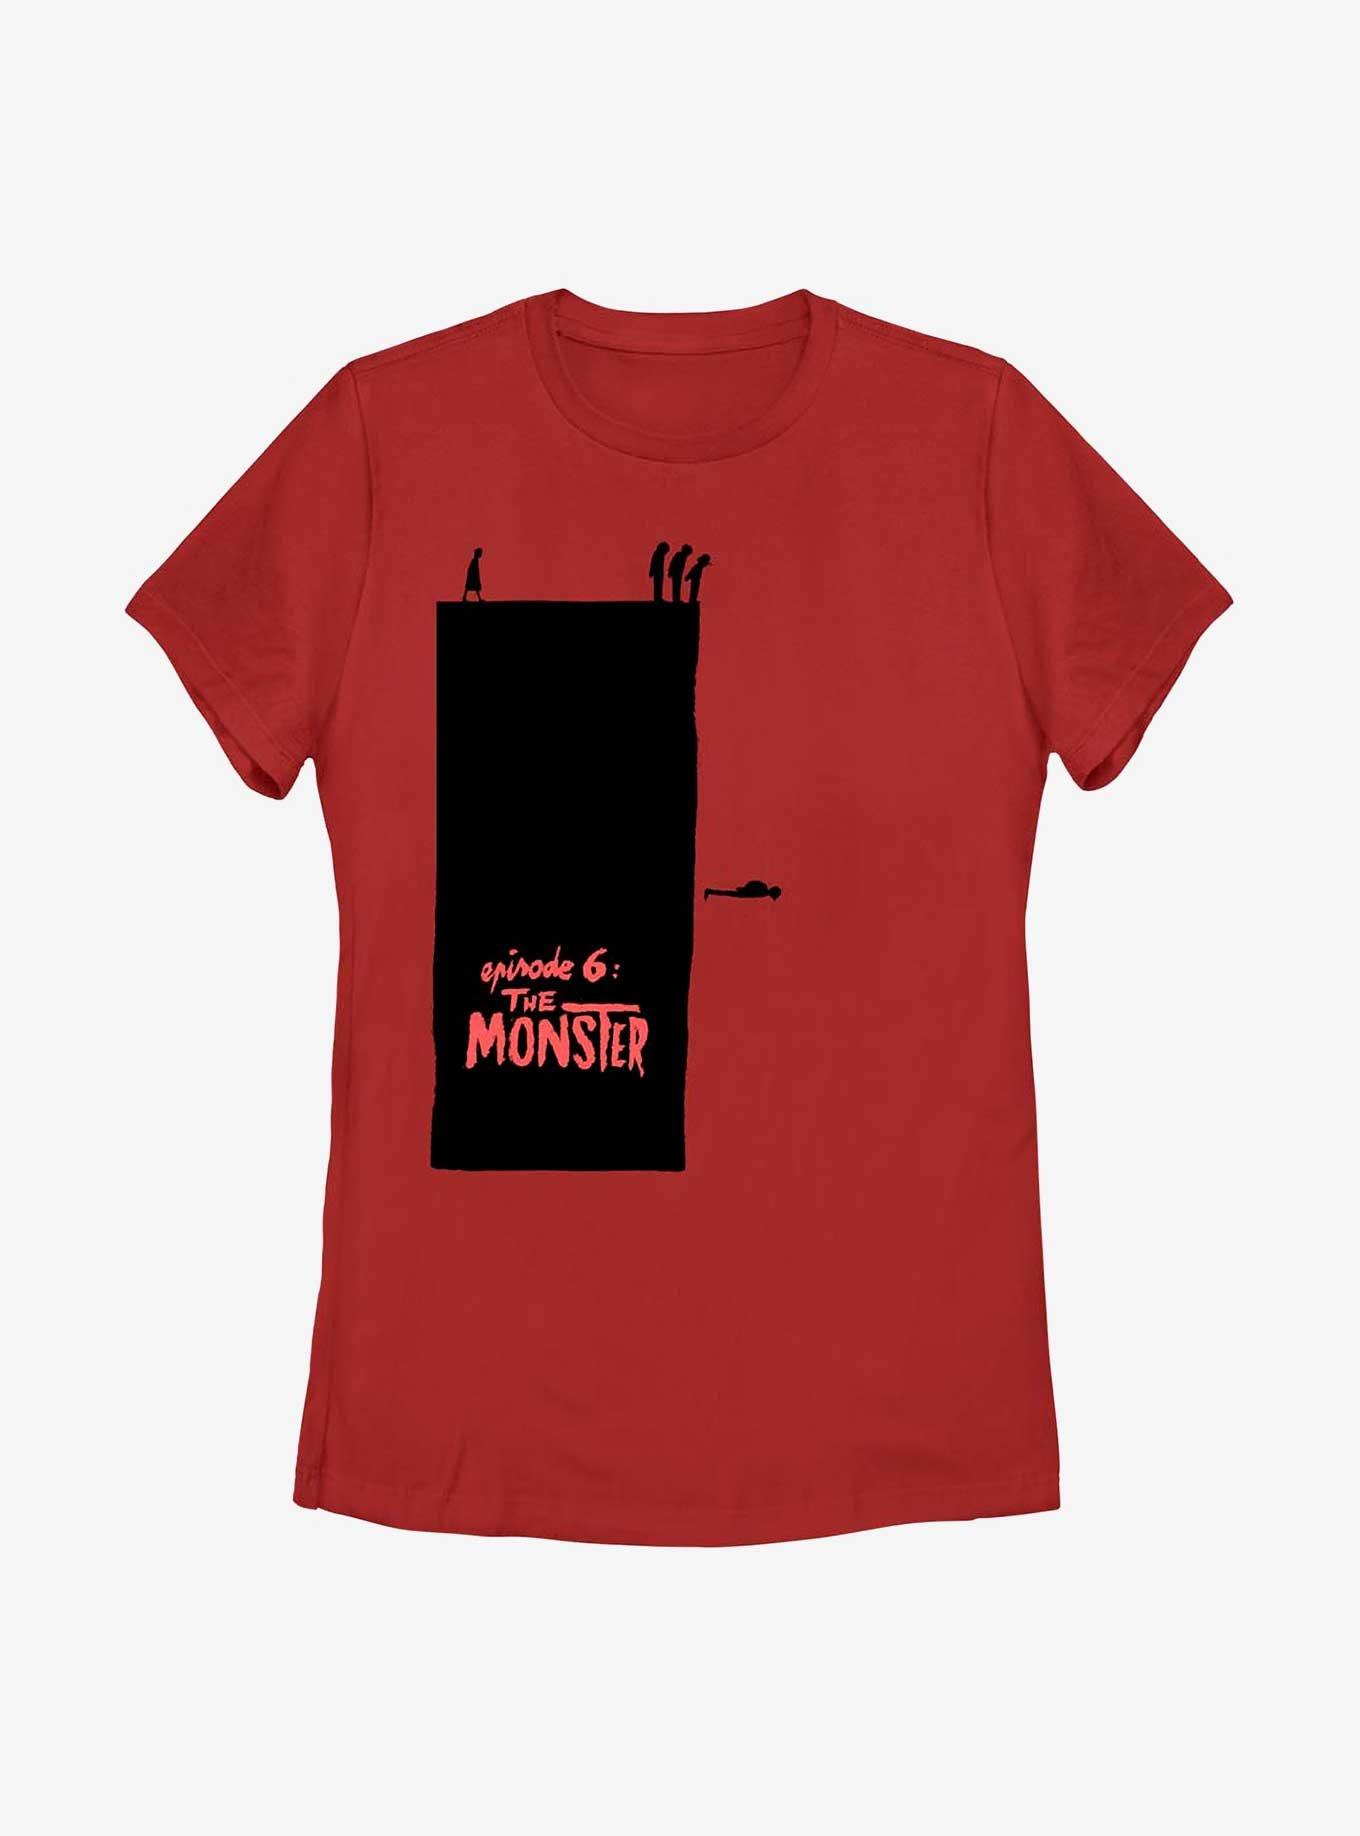 Stranger Things Episode 6 The Monster Womens T-Shirt, RED, hi-res